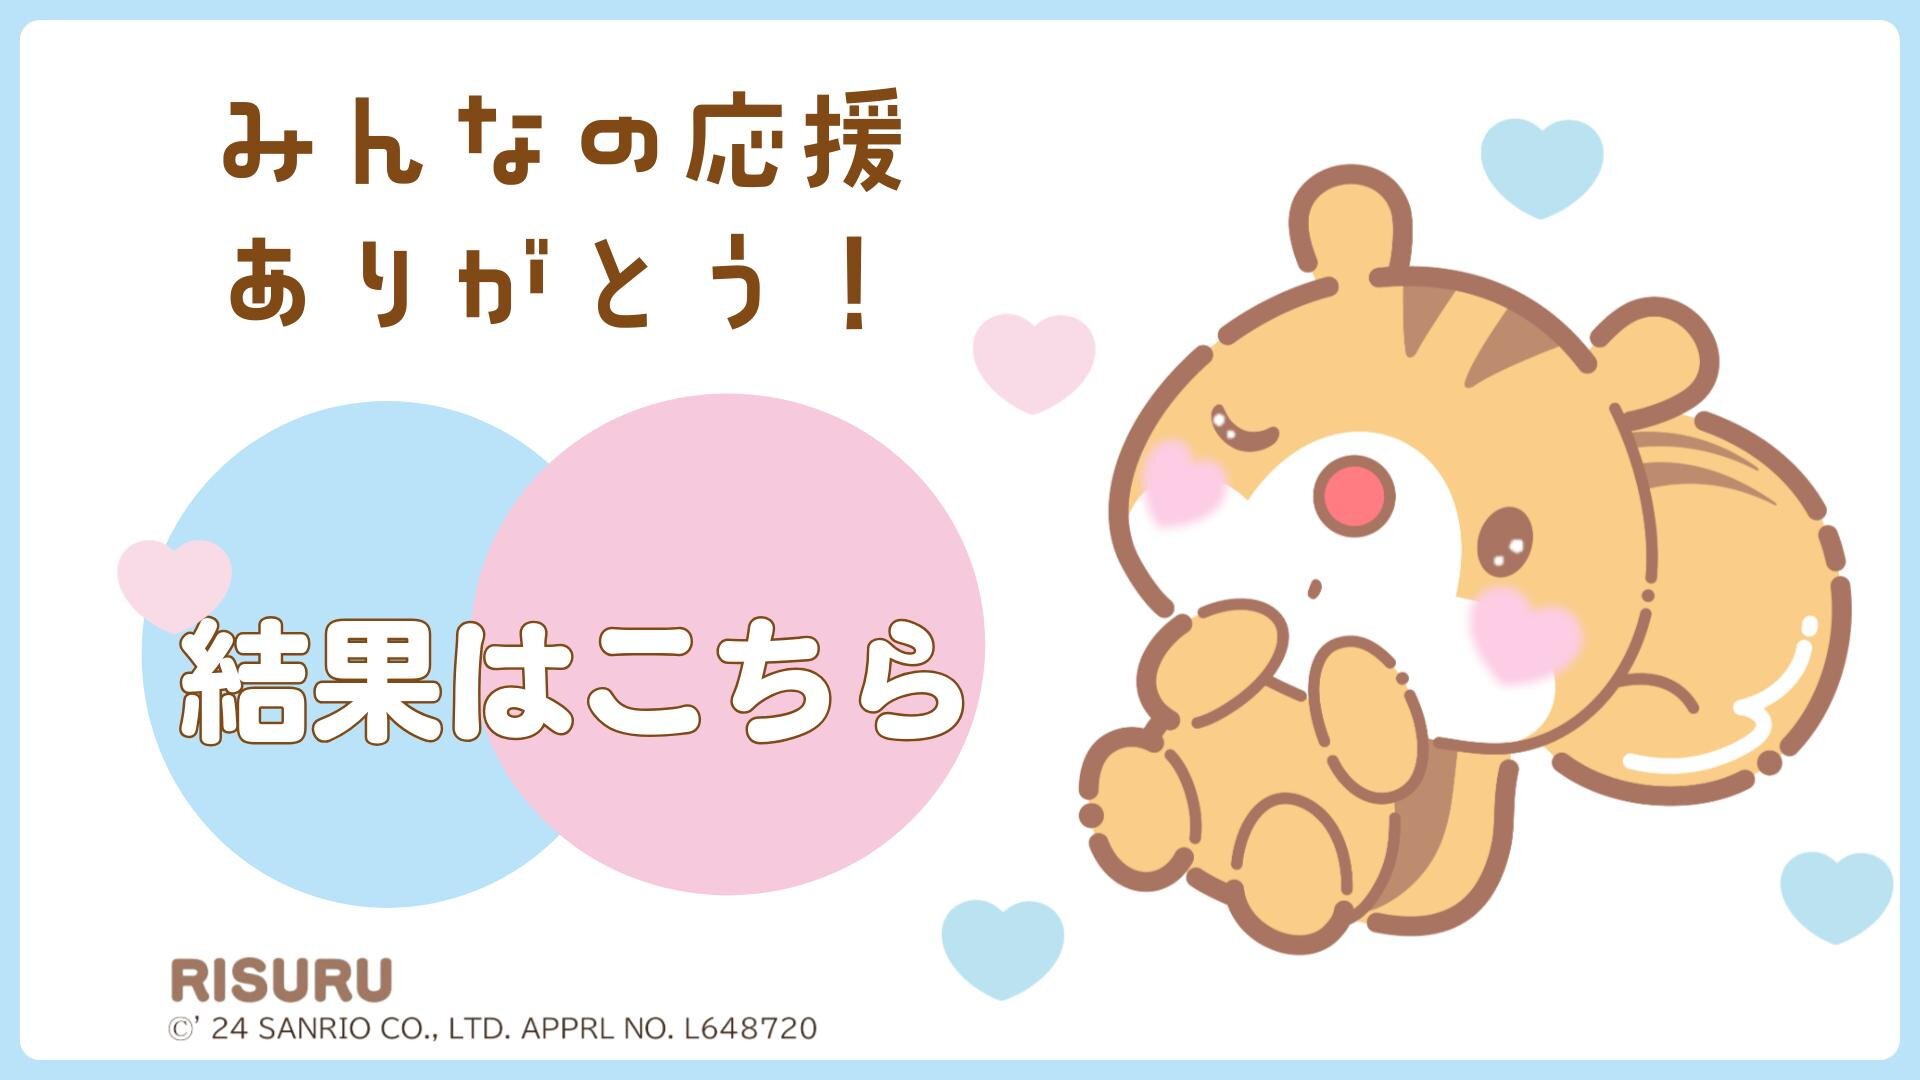 tama-sanrio-kekka-banner.jpeg